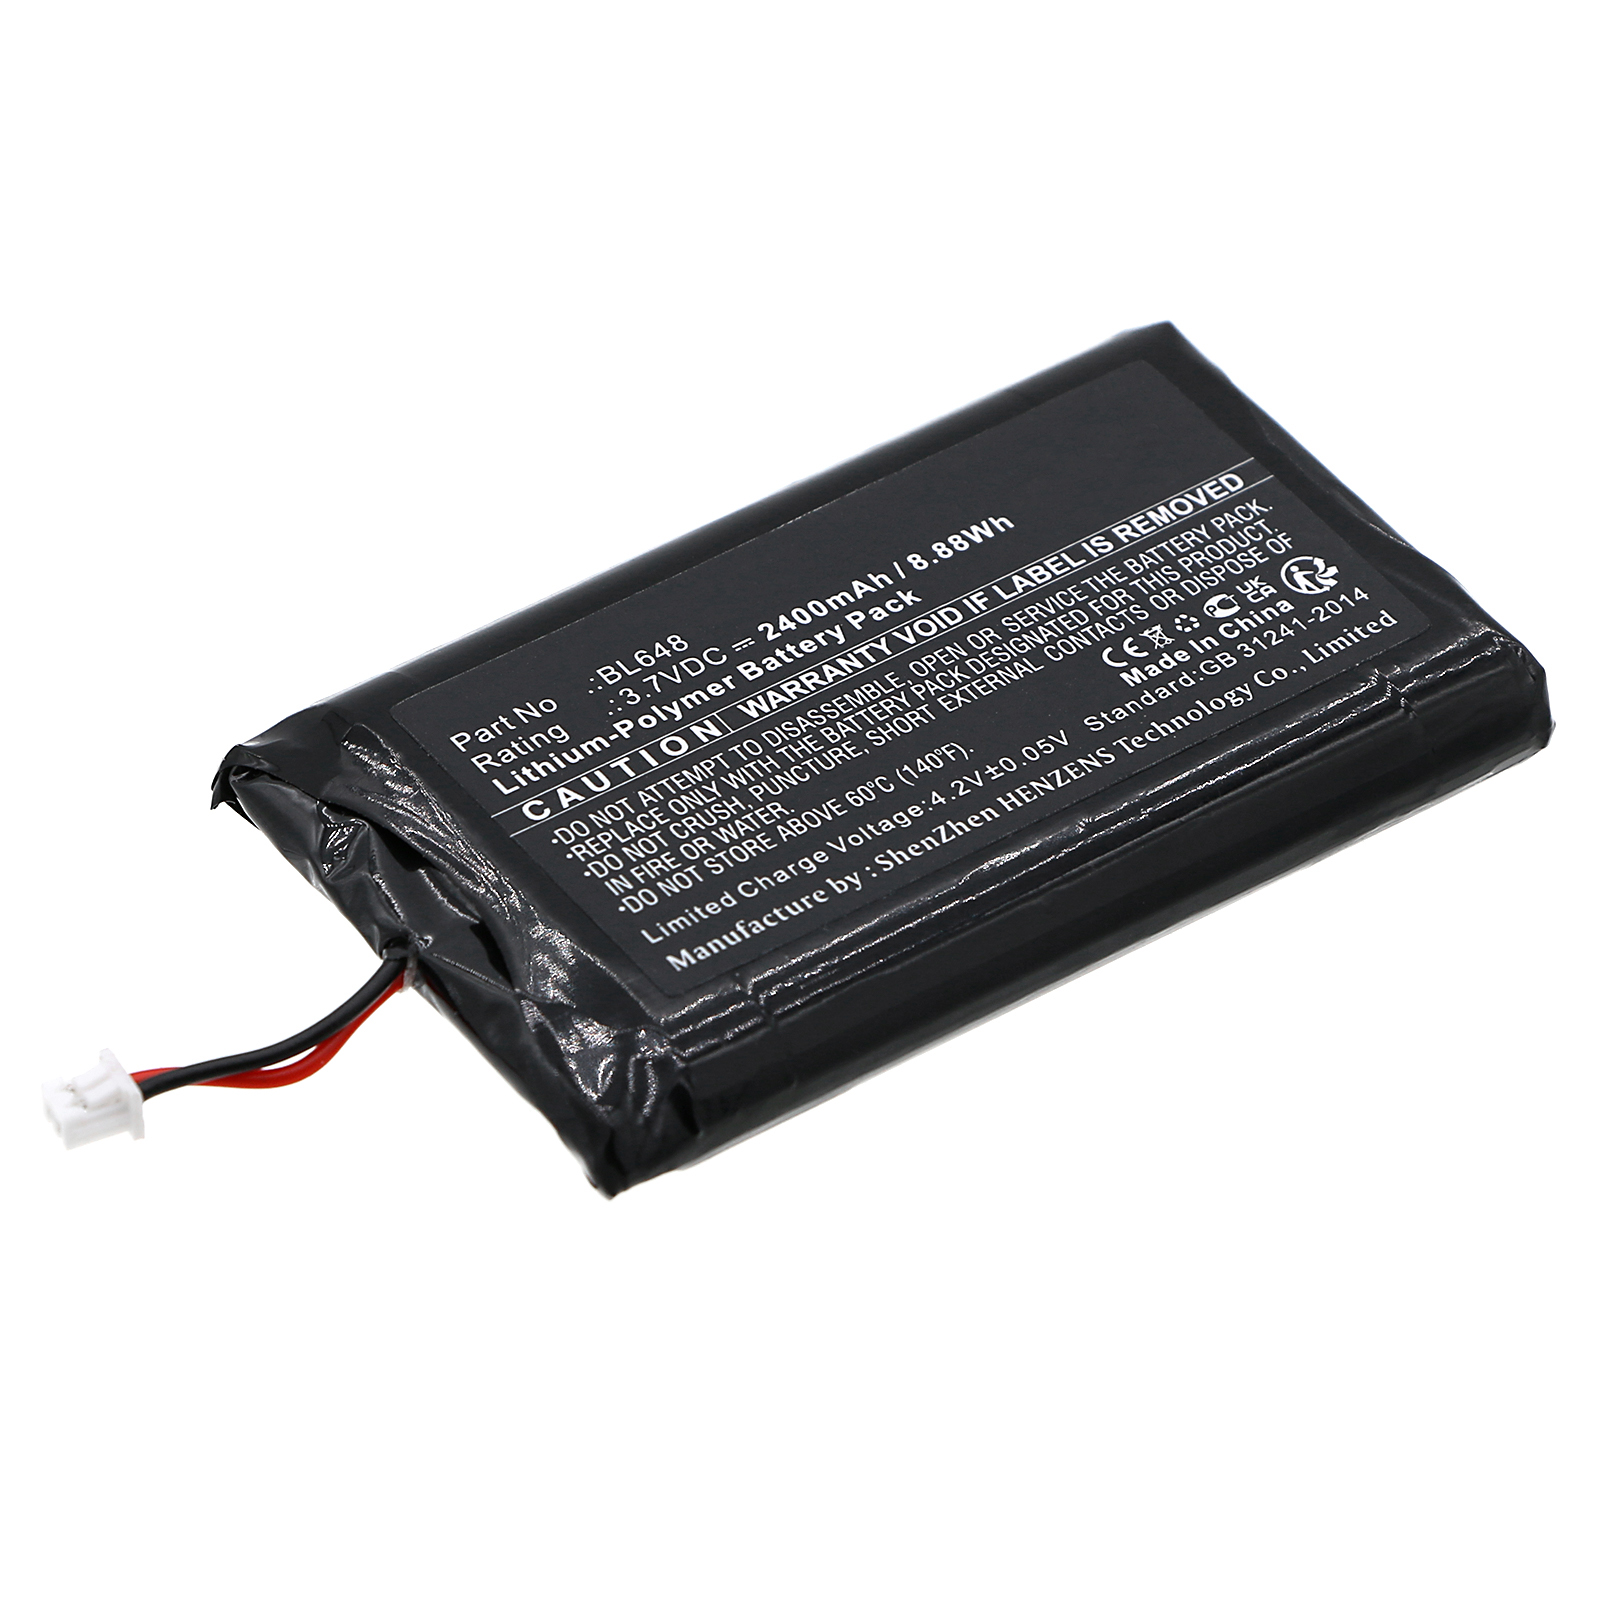 Synergy Digital 2-Way Radio Battery, Compatible with Retevis BL48 2-Way Radio Battery (Li-Pol, 3.7V, 2400mAh)